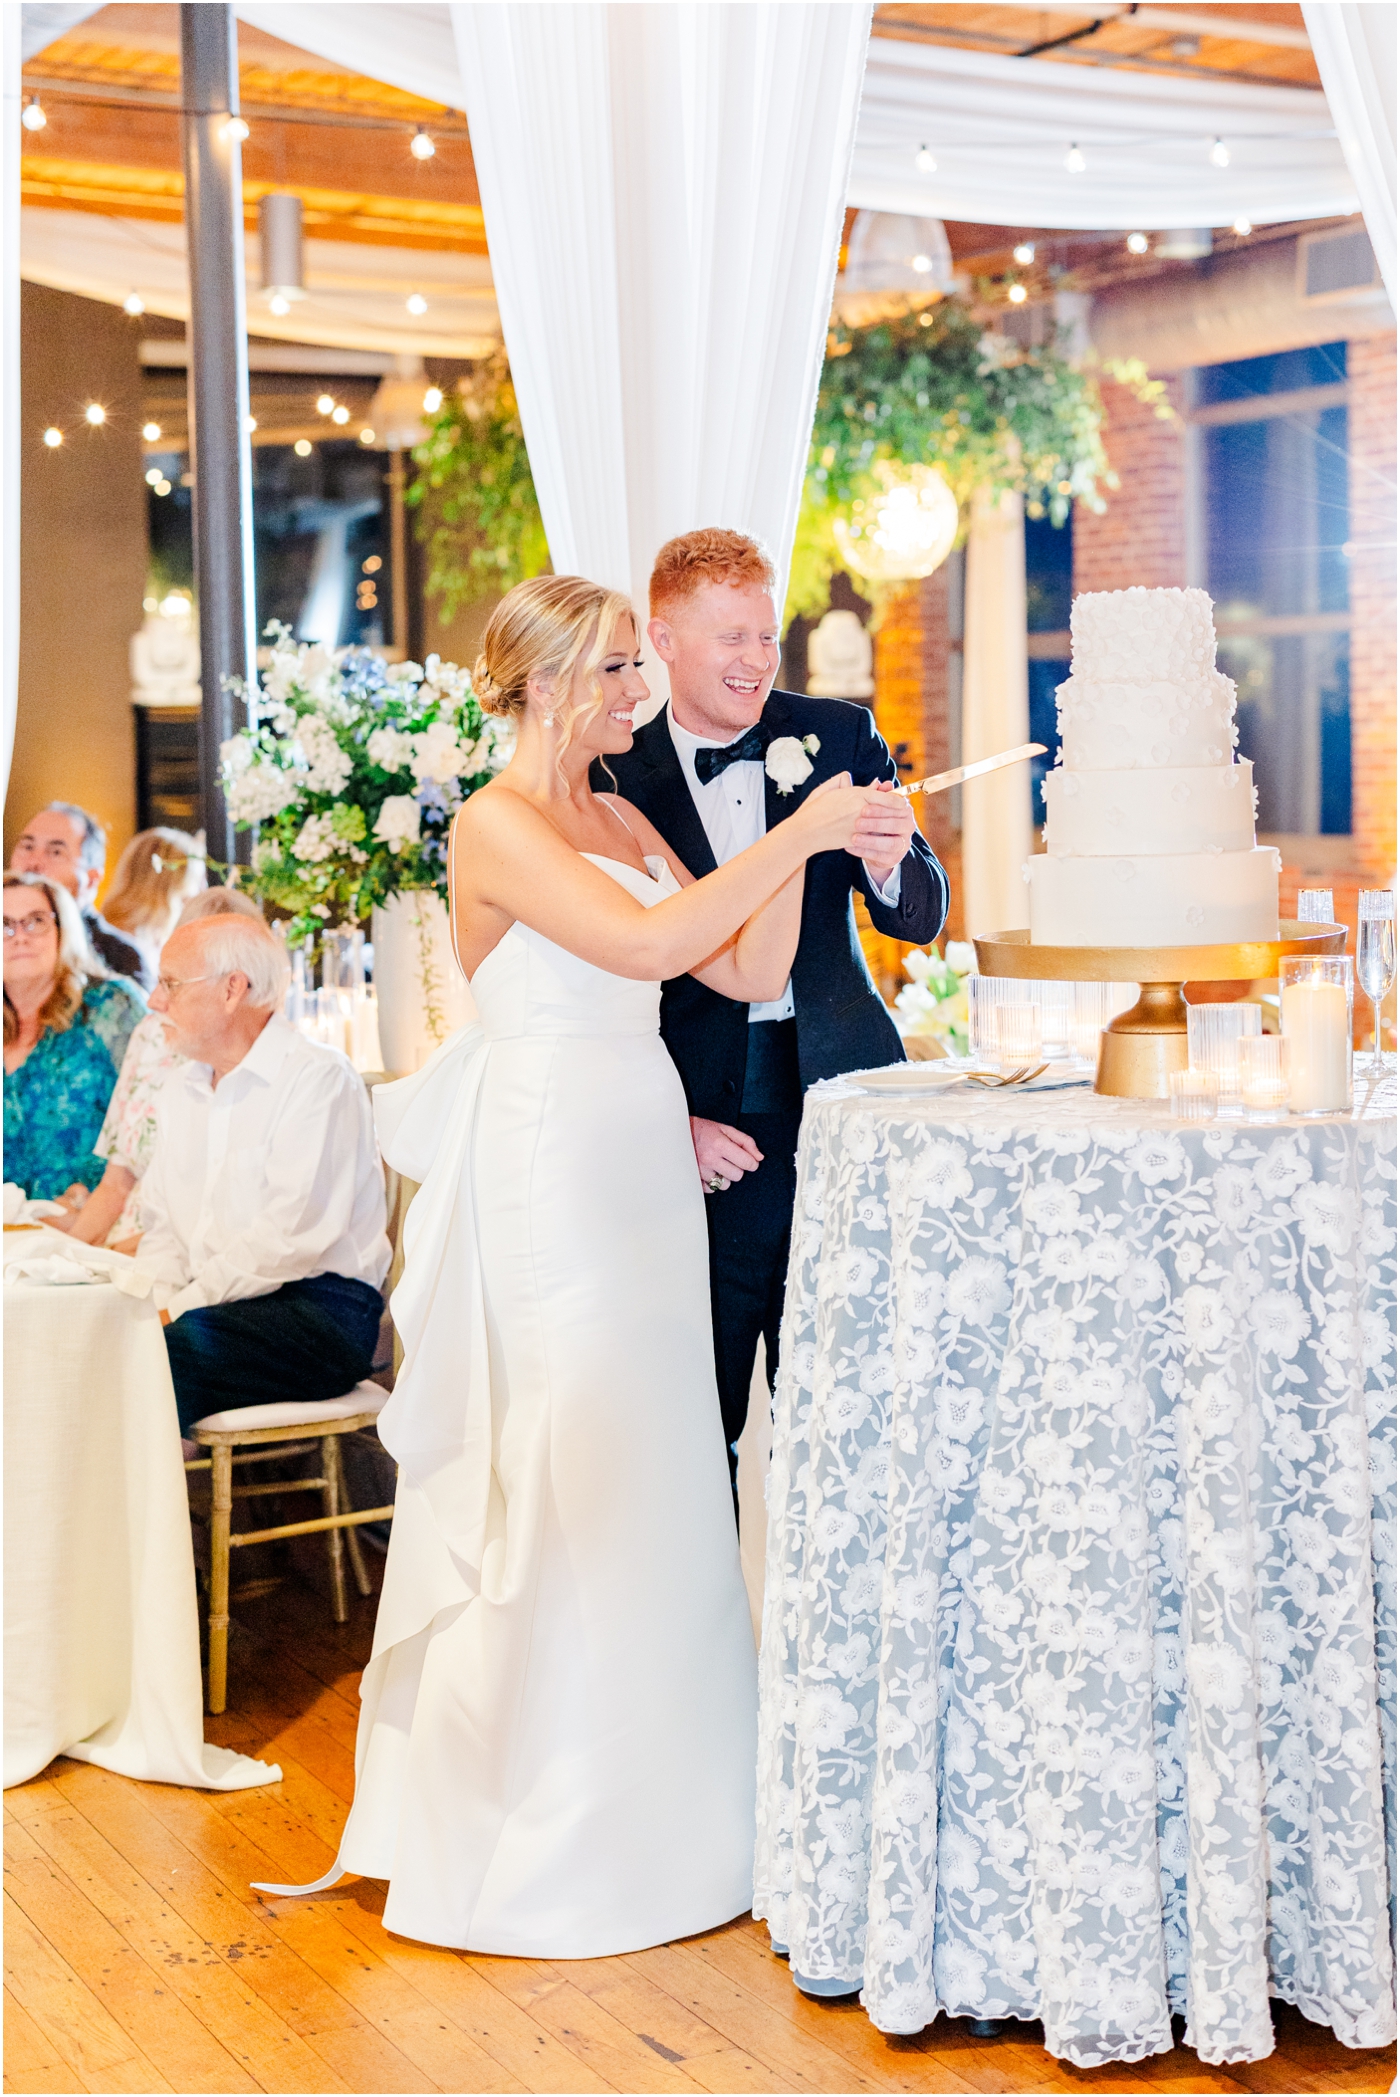 Bride & groom cut the cake at their Huguenot Loft Wedding